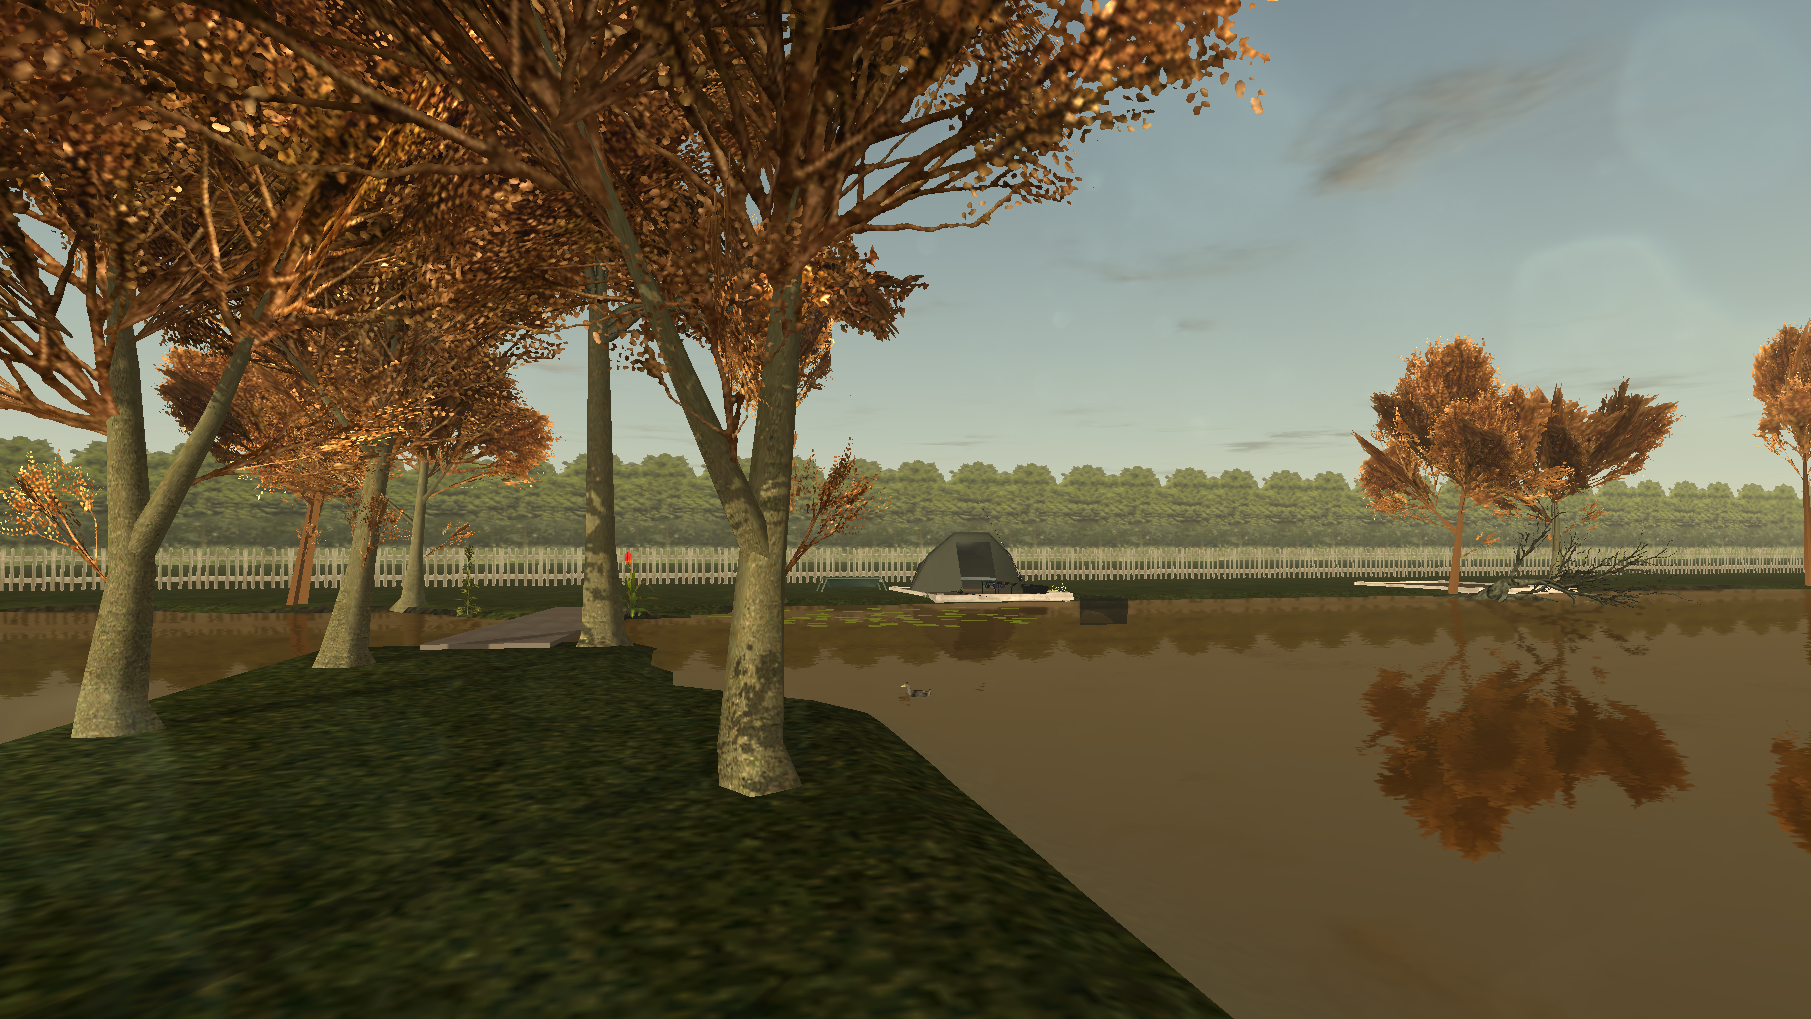 carp fishing simulator pc game screenshot